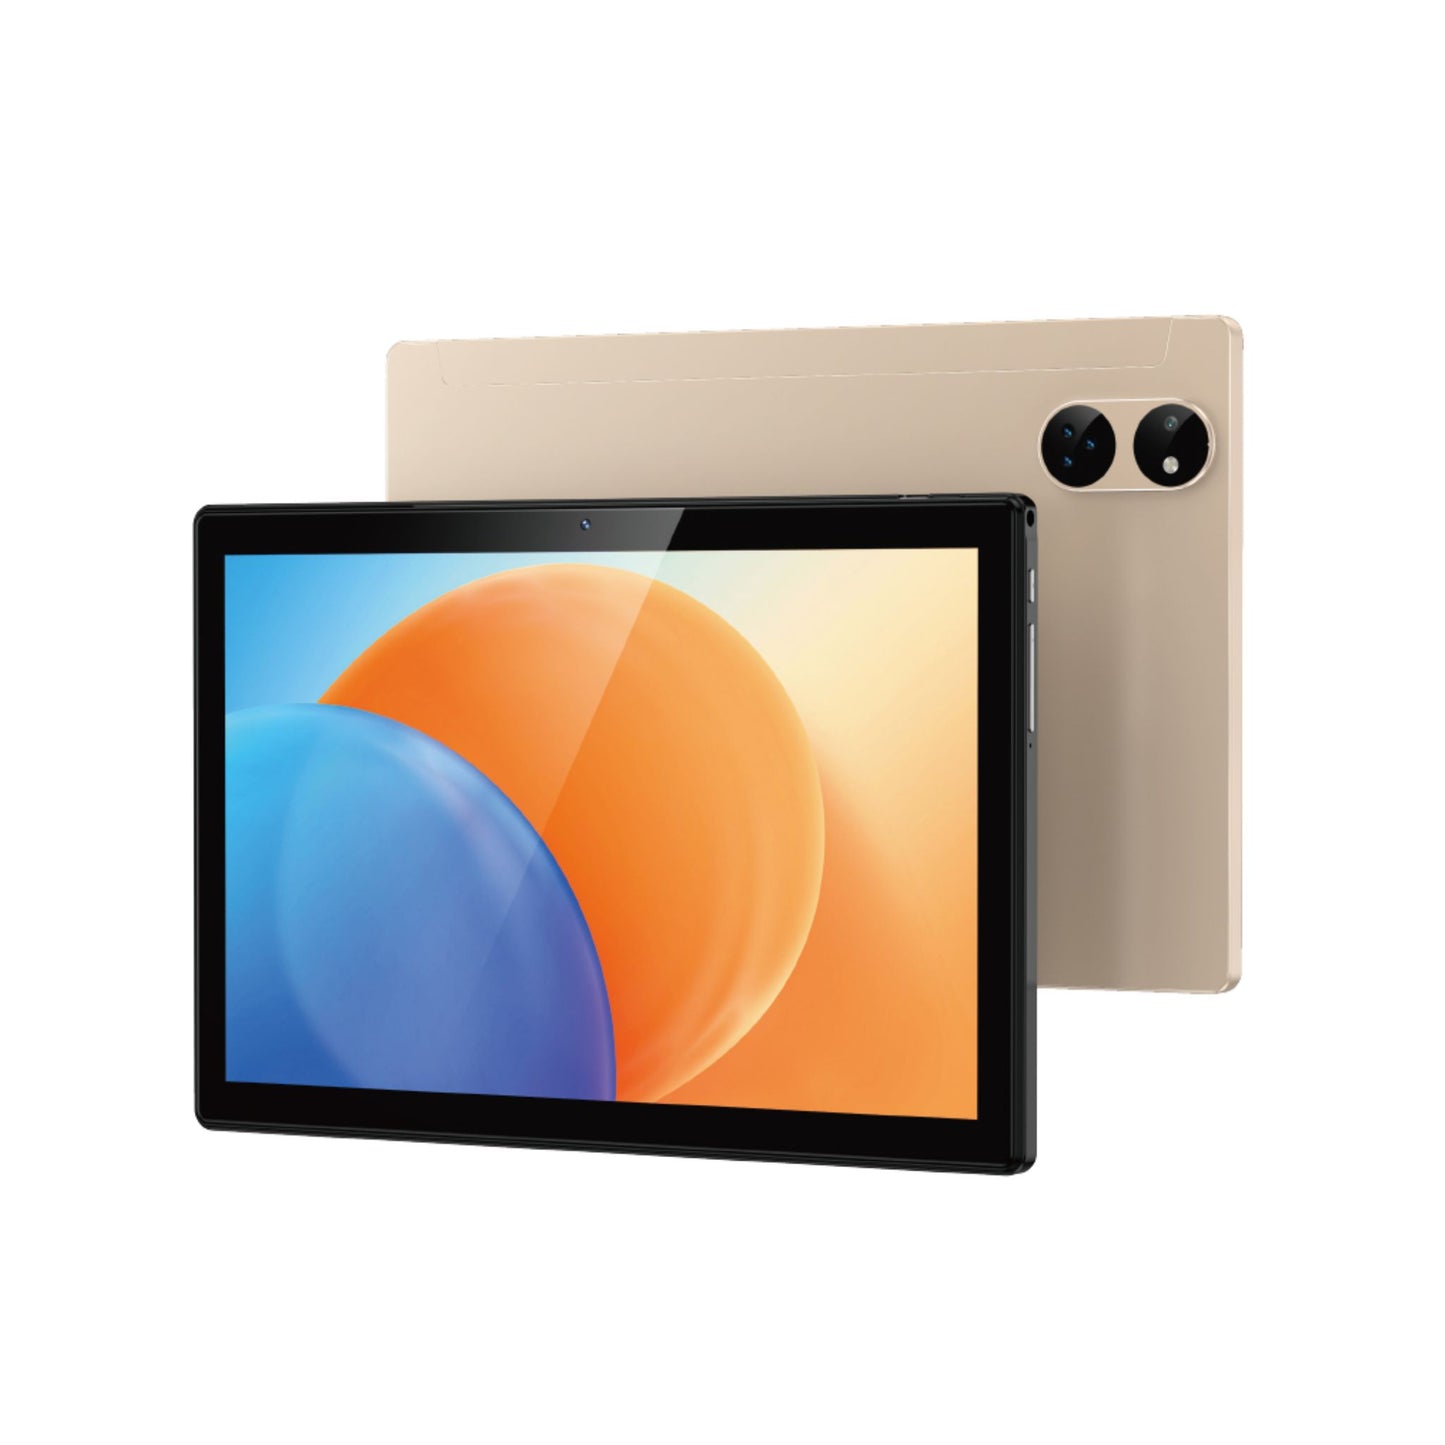 Modio M22 5G 10.1 Inch (8GB RAM+512GB ROM) Smart Tablets_Black